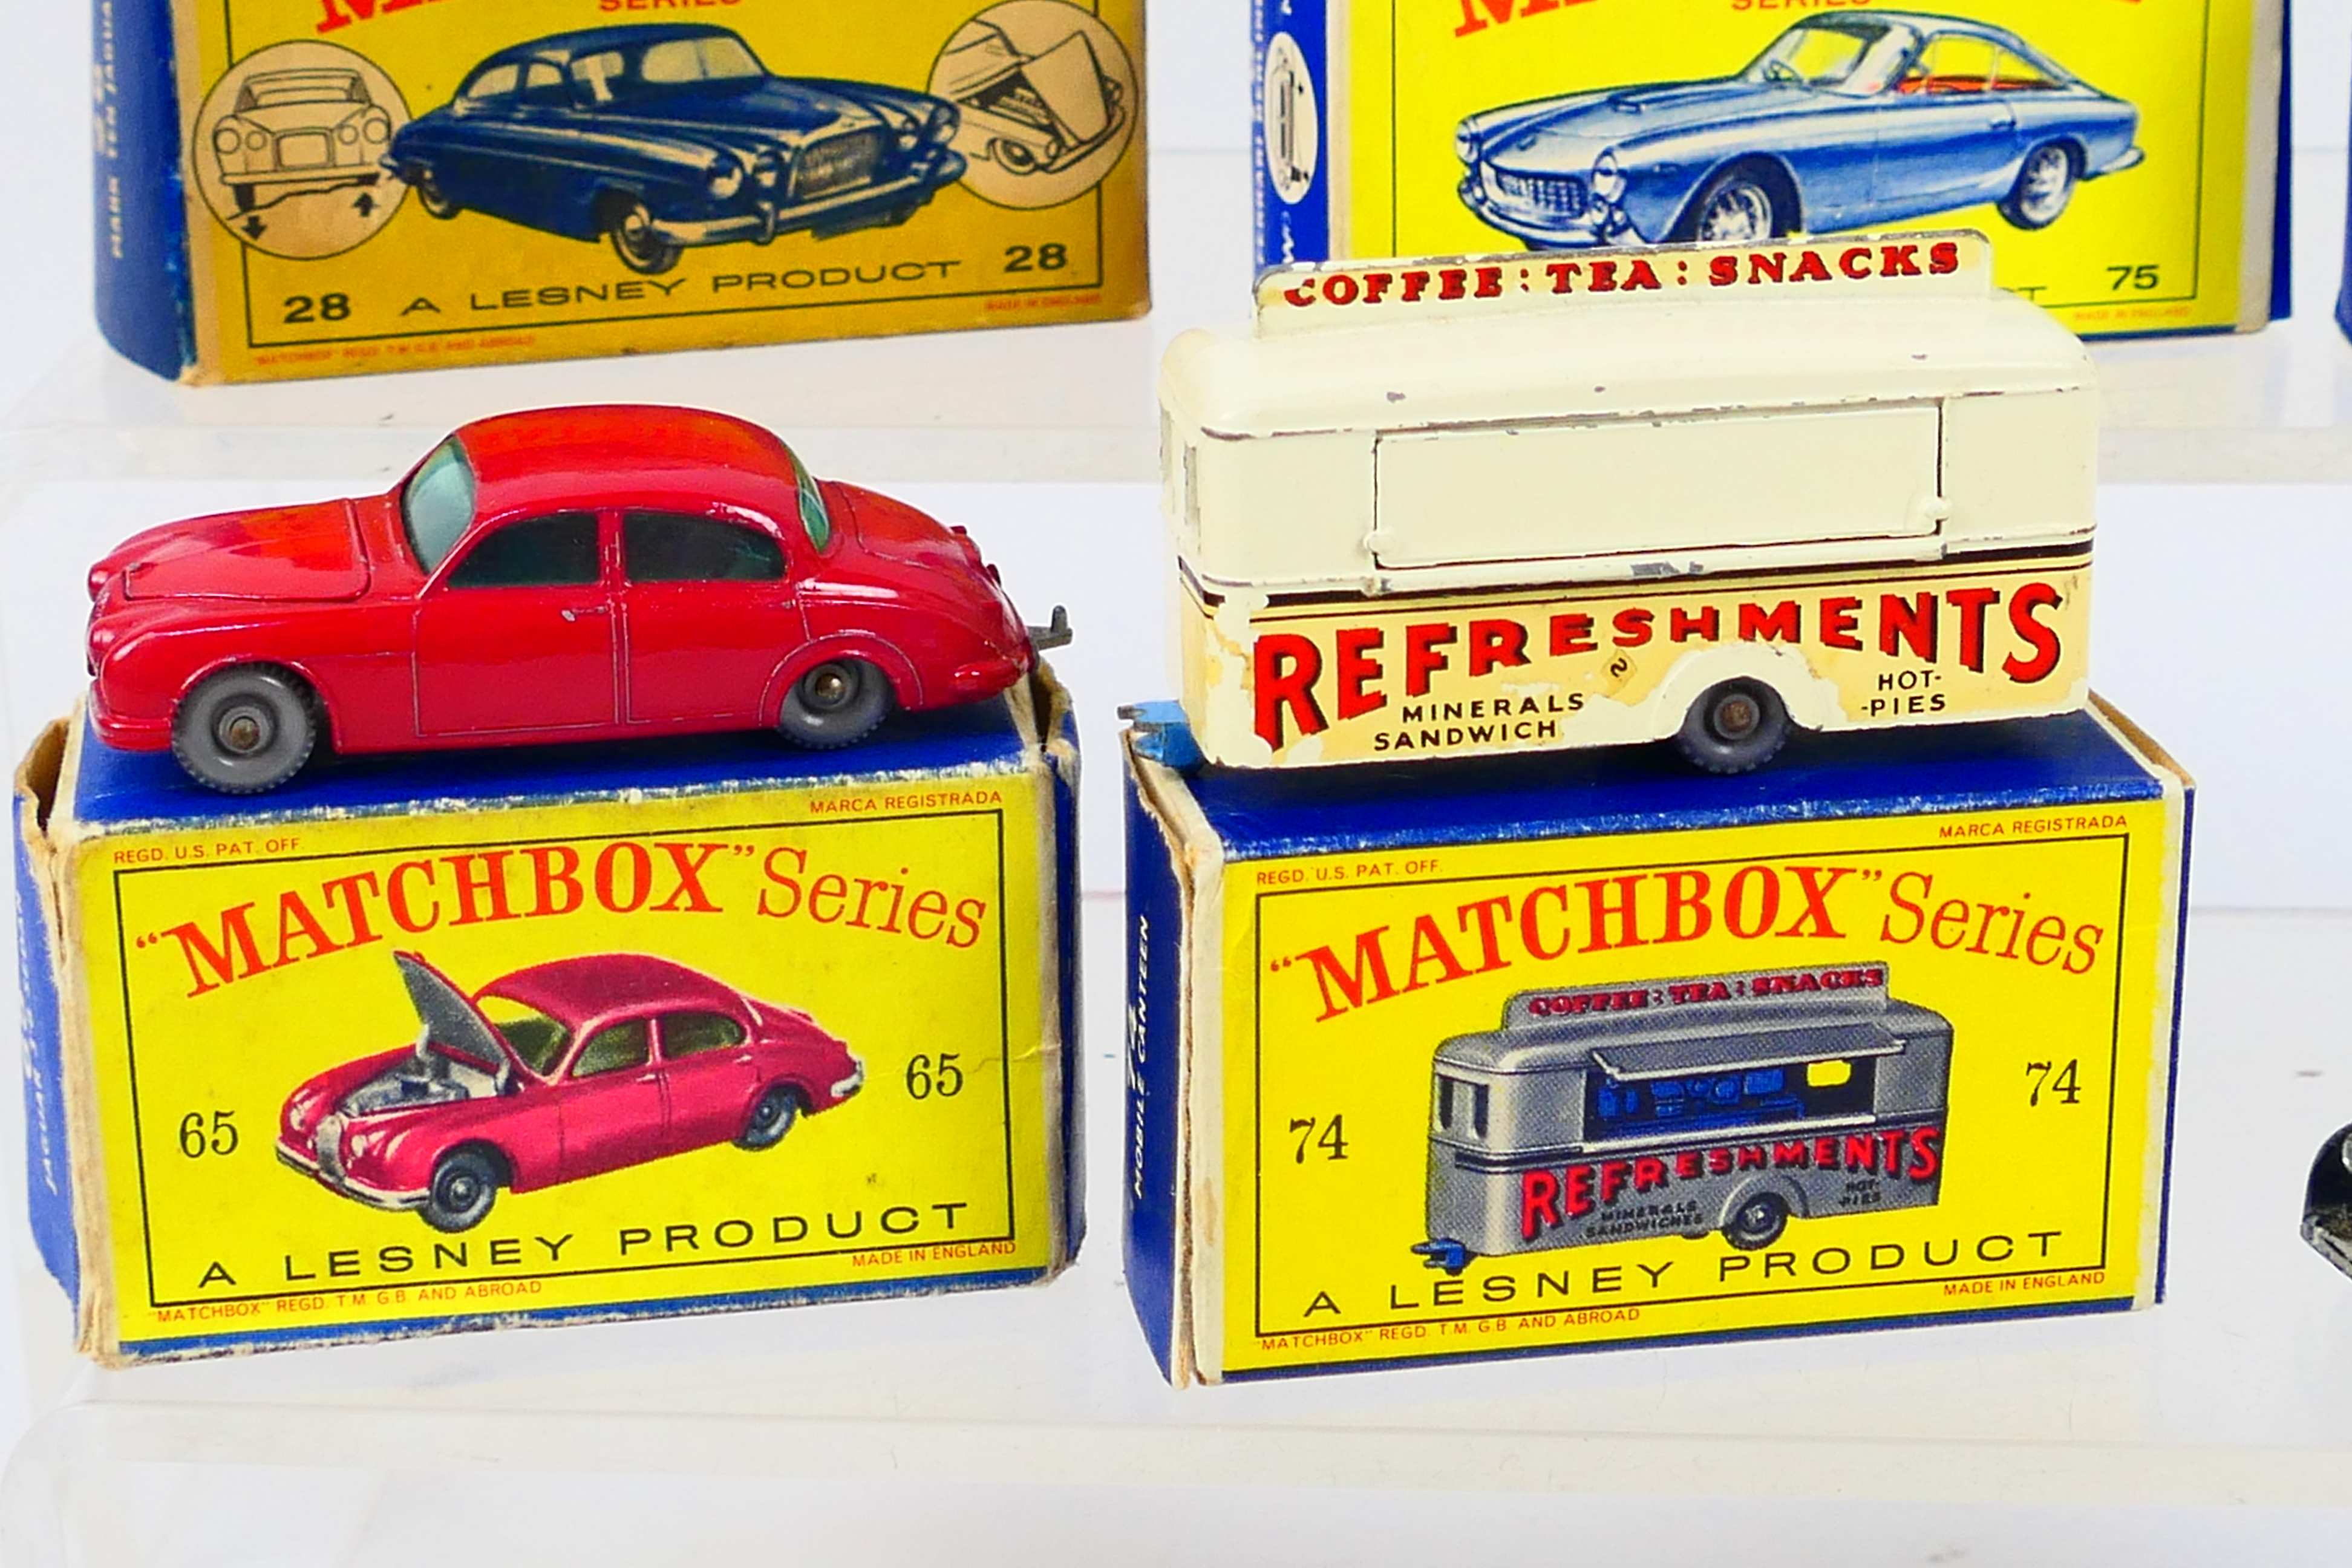 Matchbox - 11 x boxed/unboxed Matchbox die-cast model vehicles - Lot includes a #75 Ferrari - Image 4 of 8